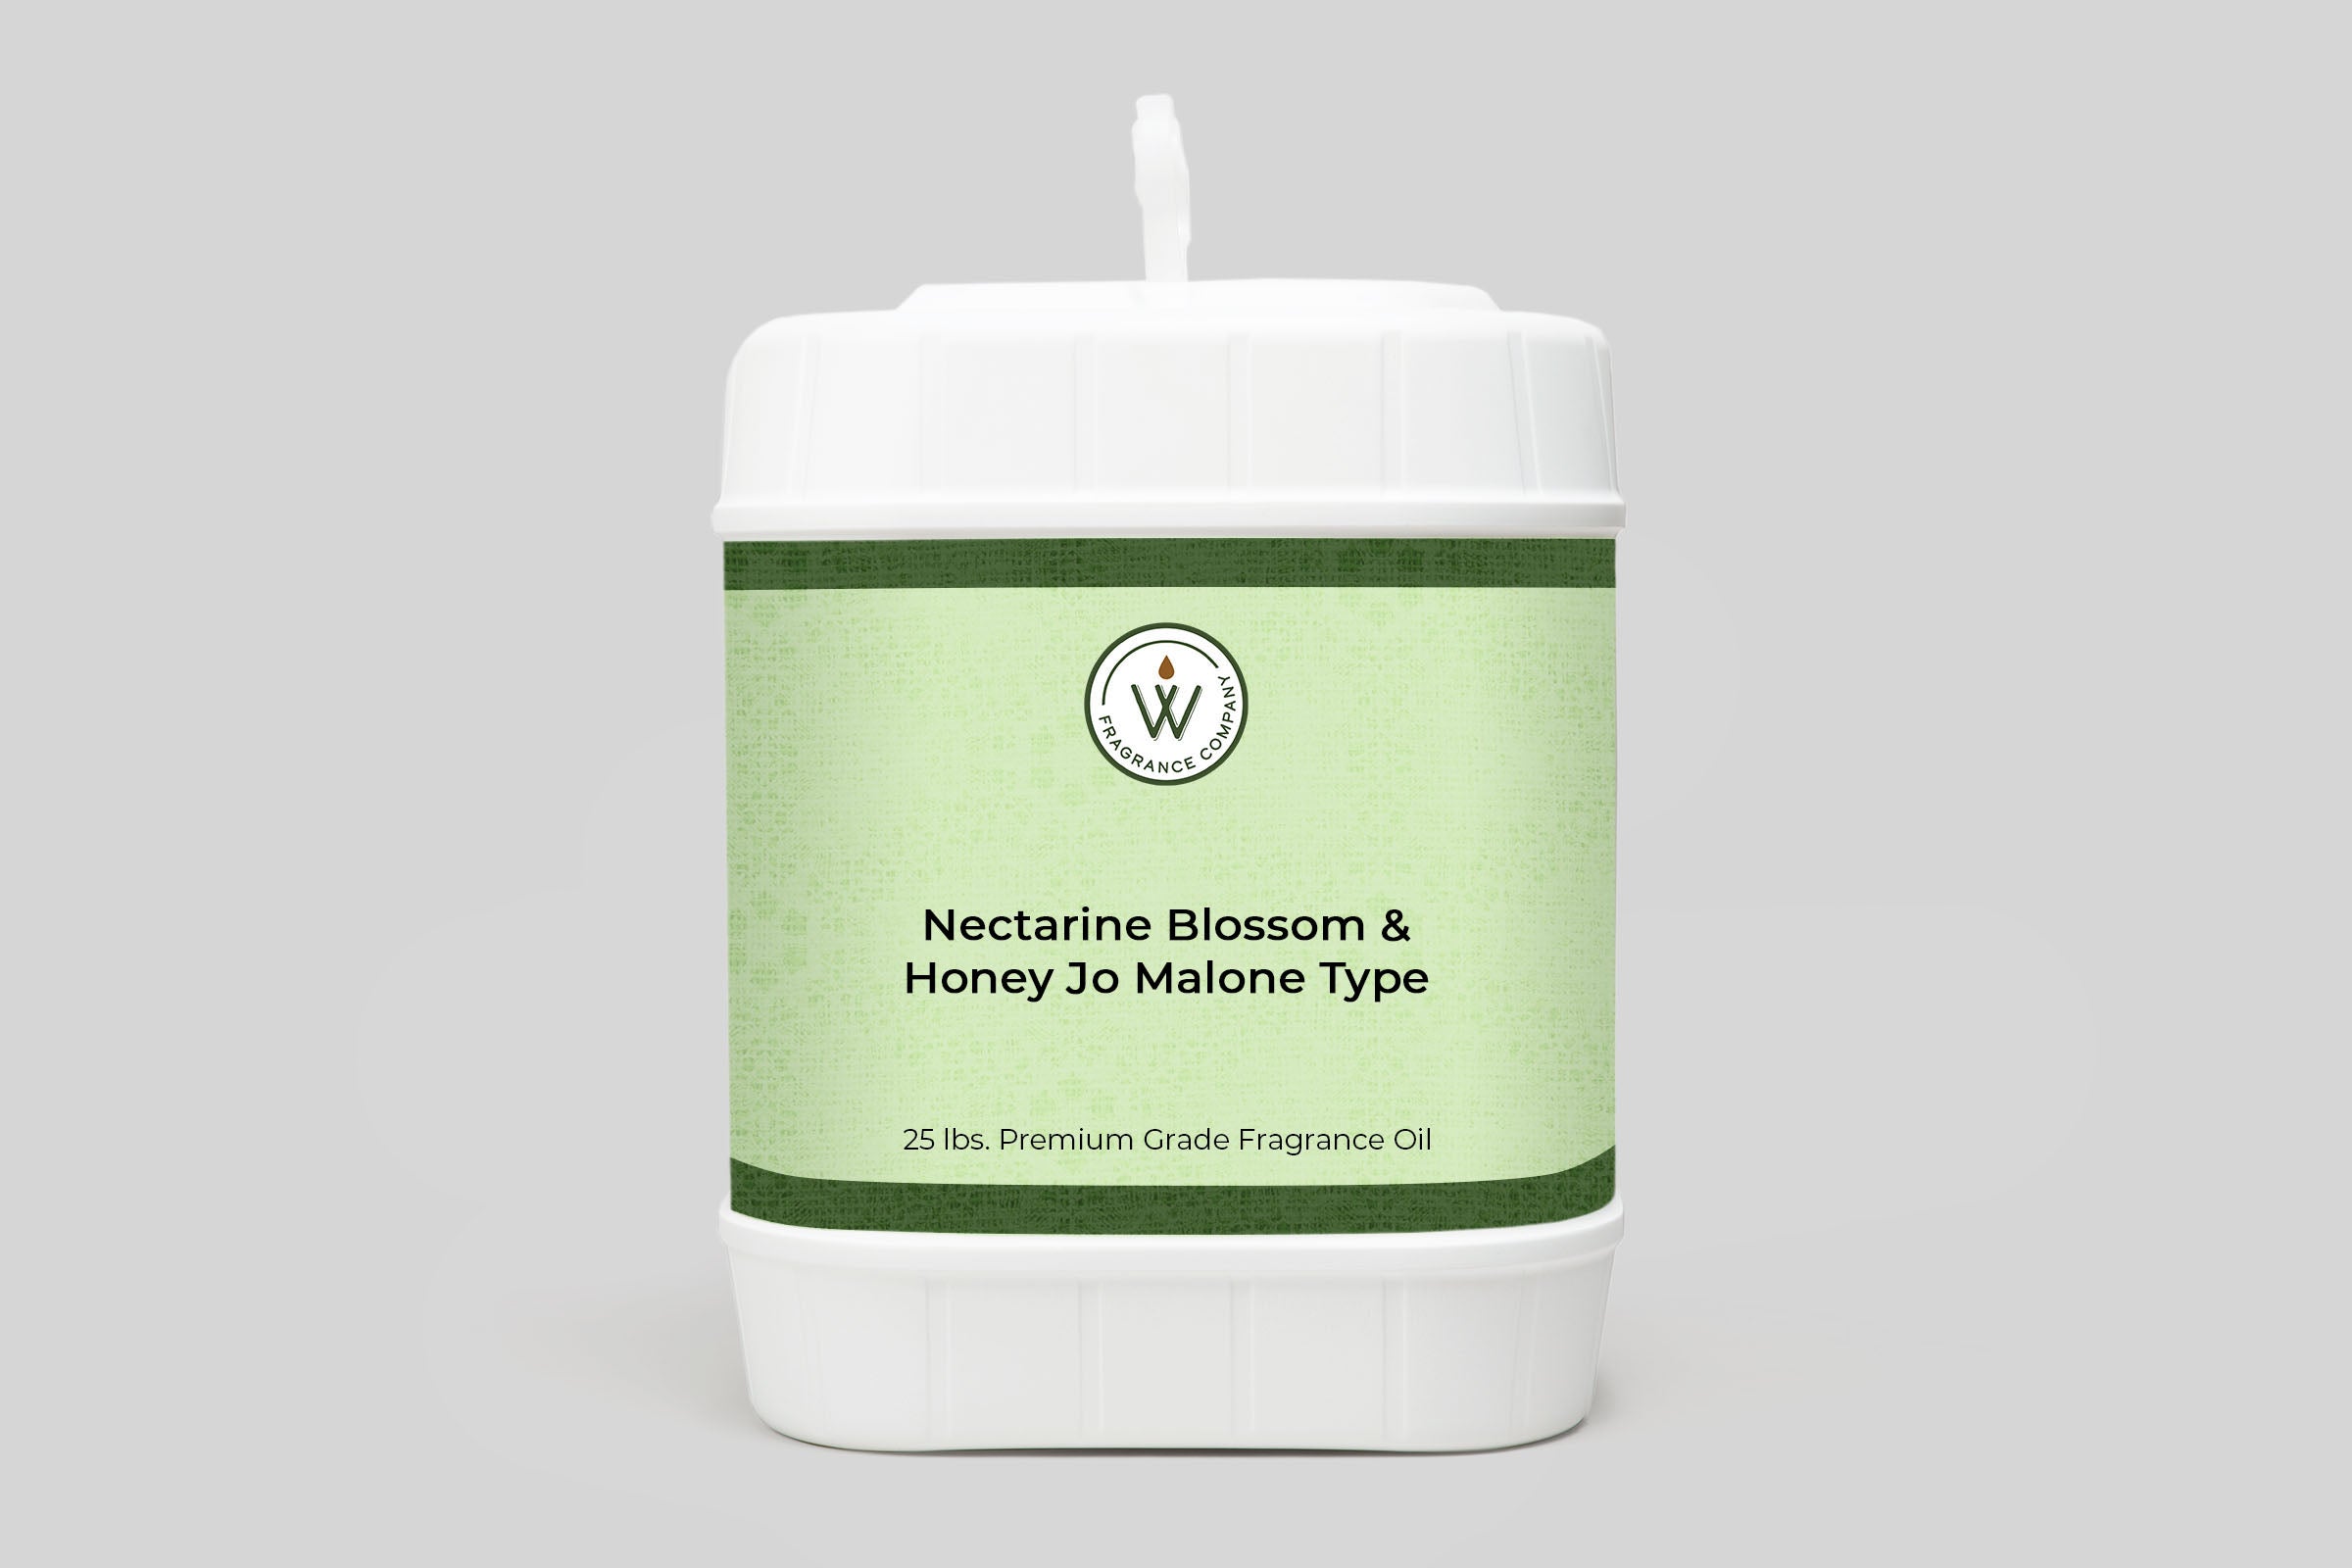 Nectarine Blossom & Honey Jo Malone Type Fragrance Oil